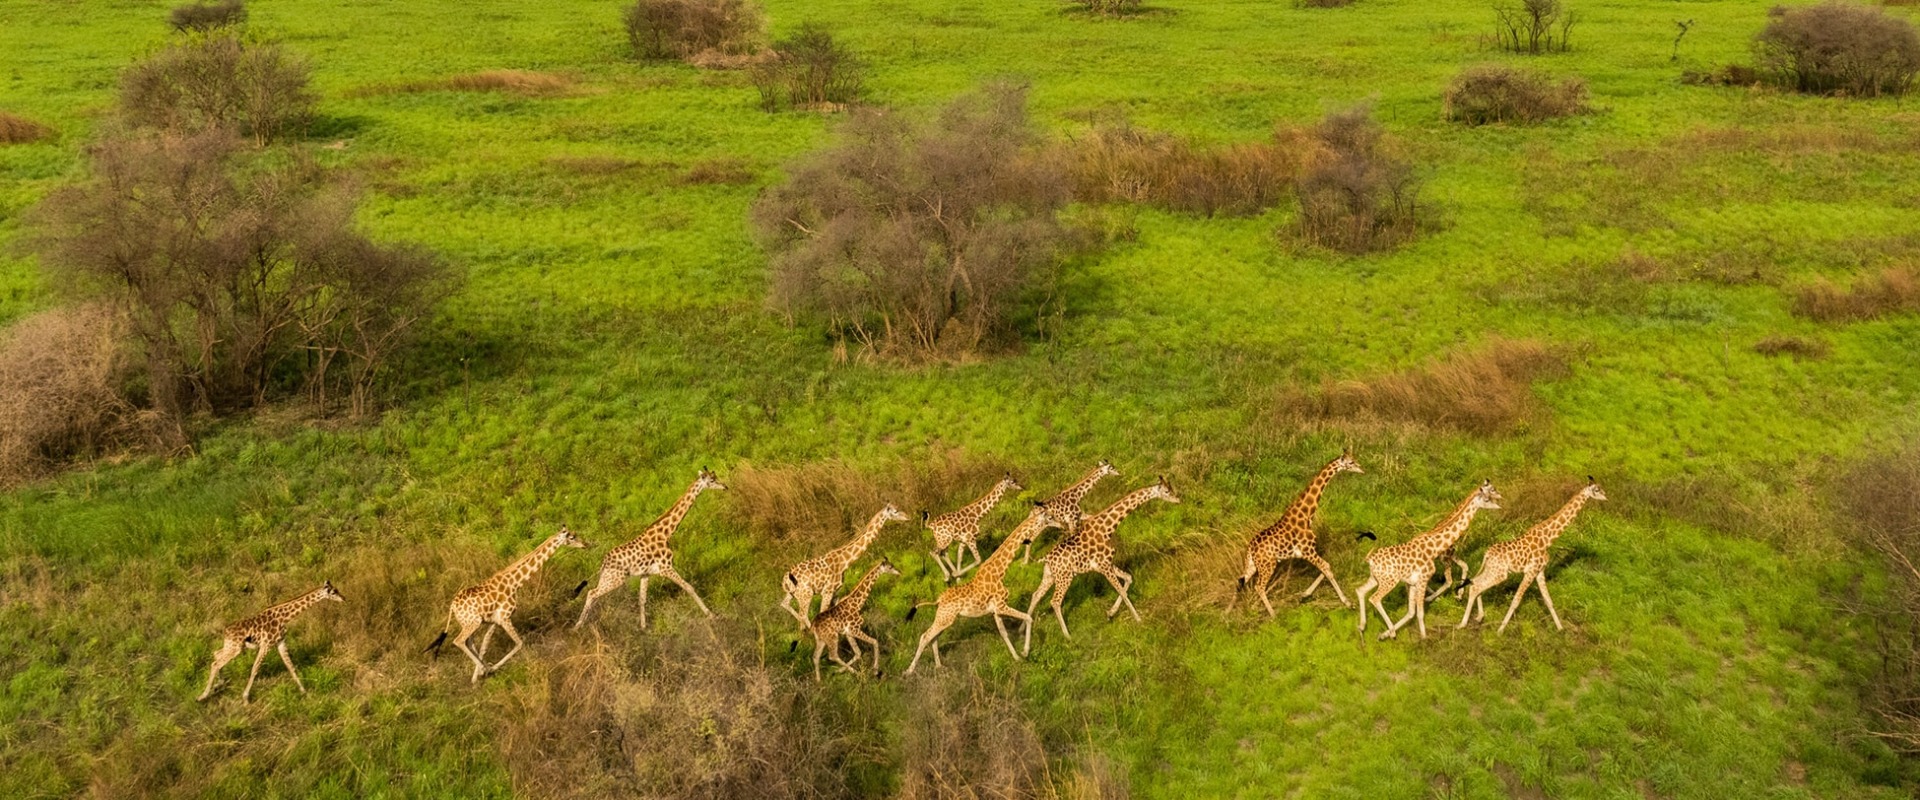 Giraffe in Boma and Badingilo National Parks, South Sudan, courtesy African Parks © Marcus Westberg